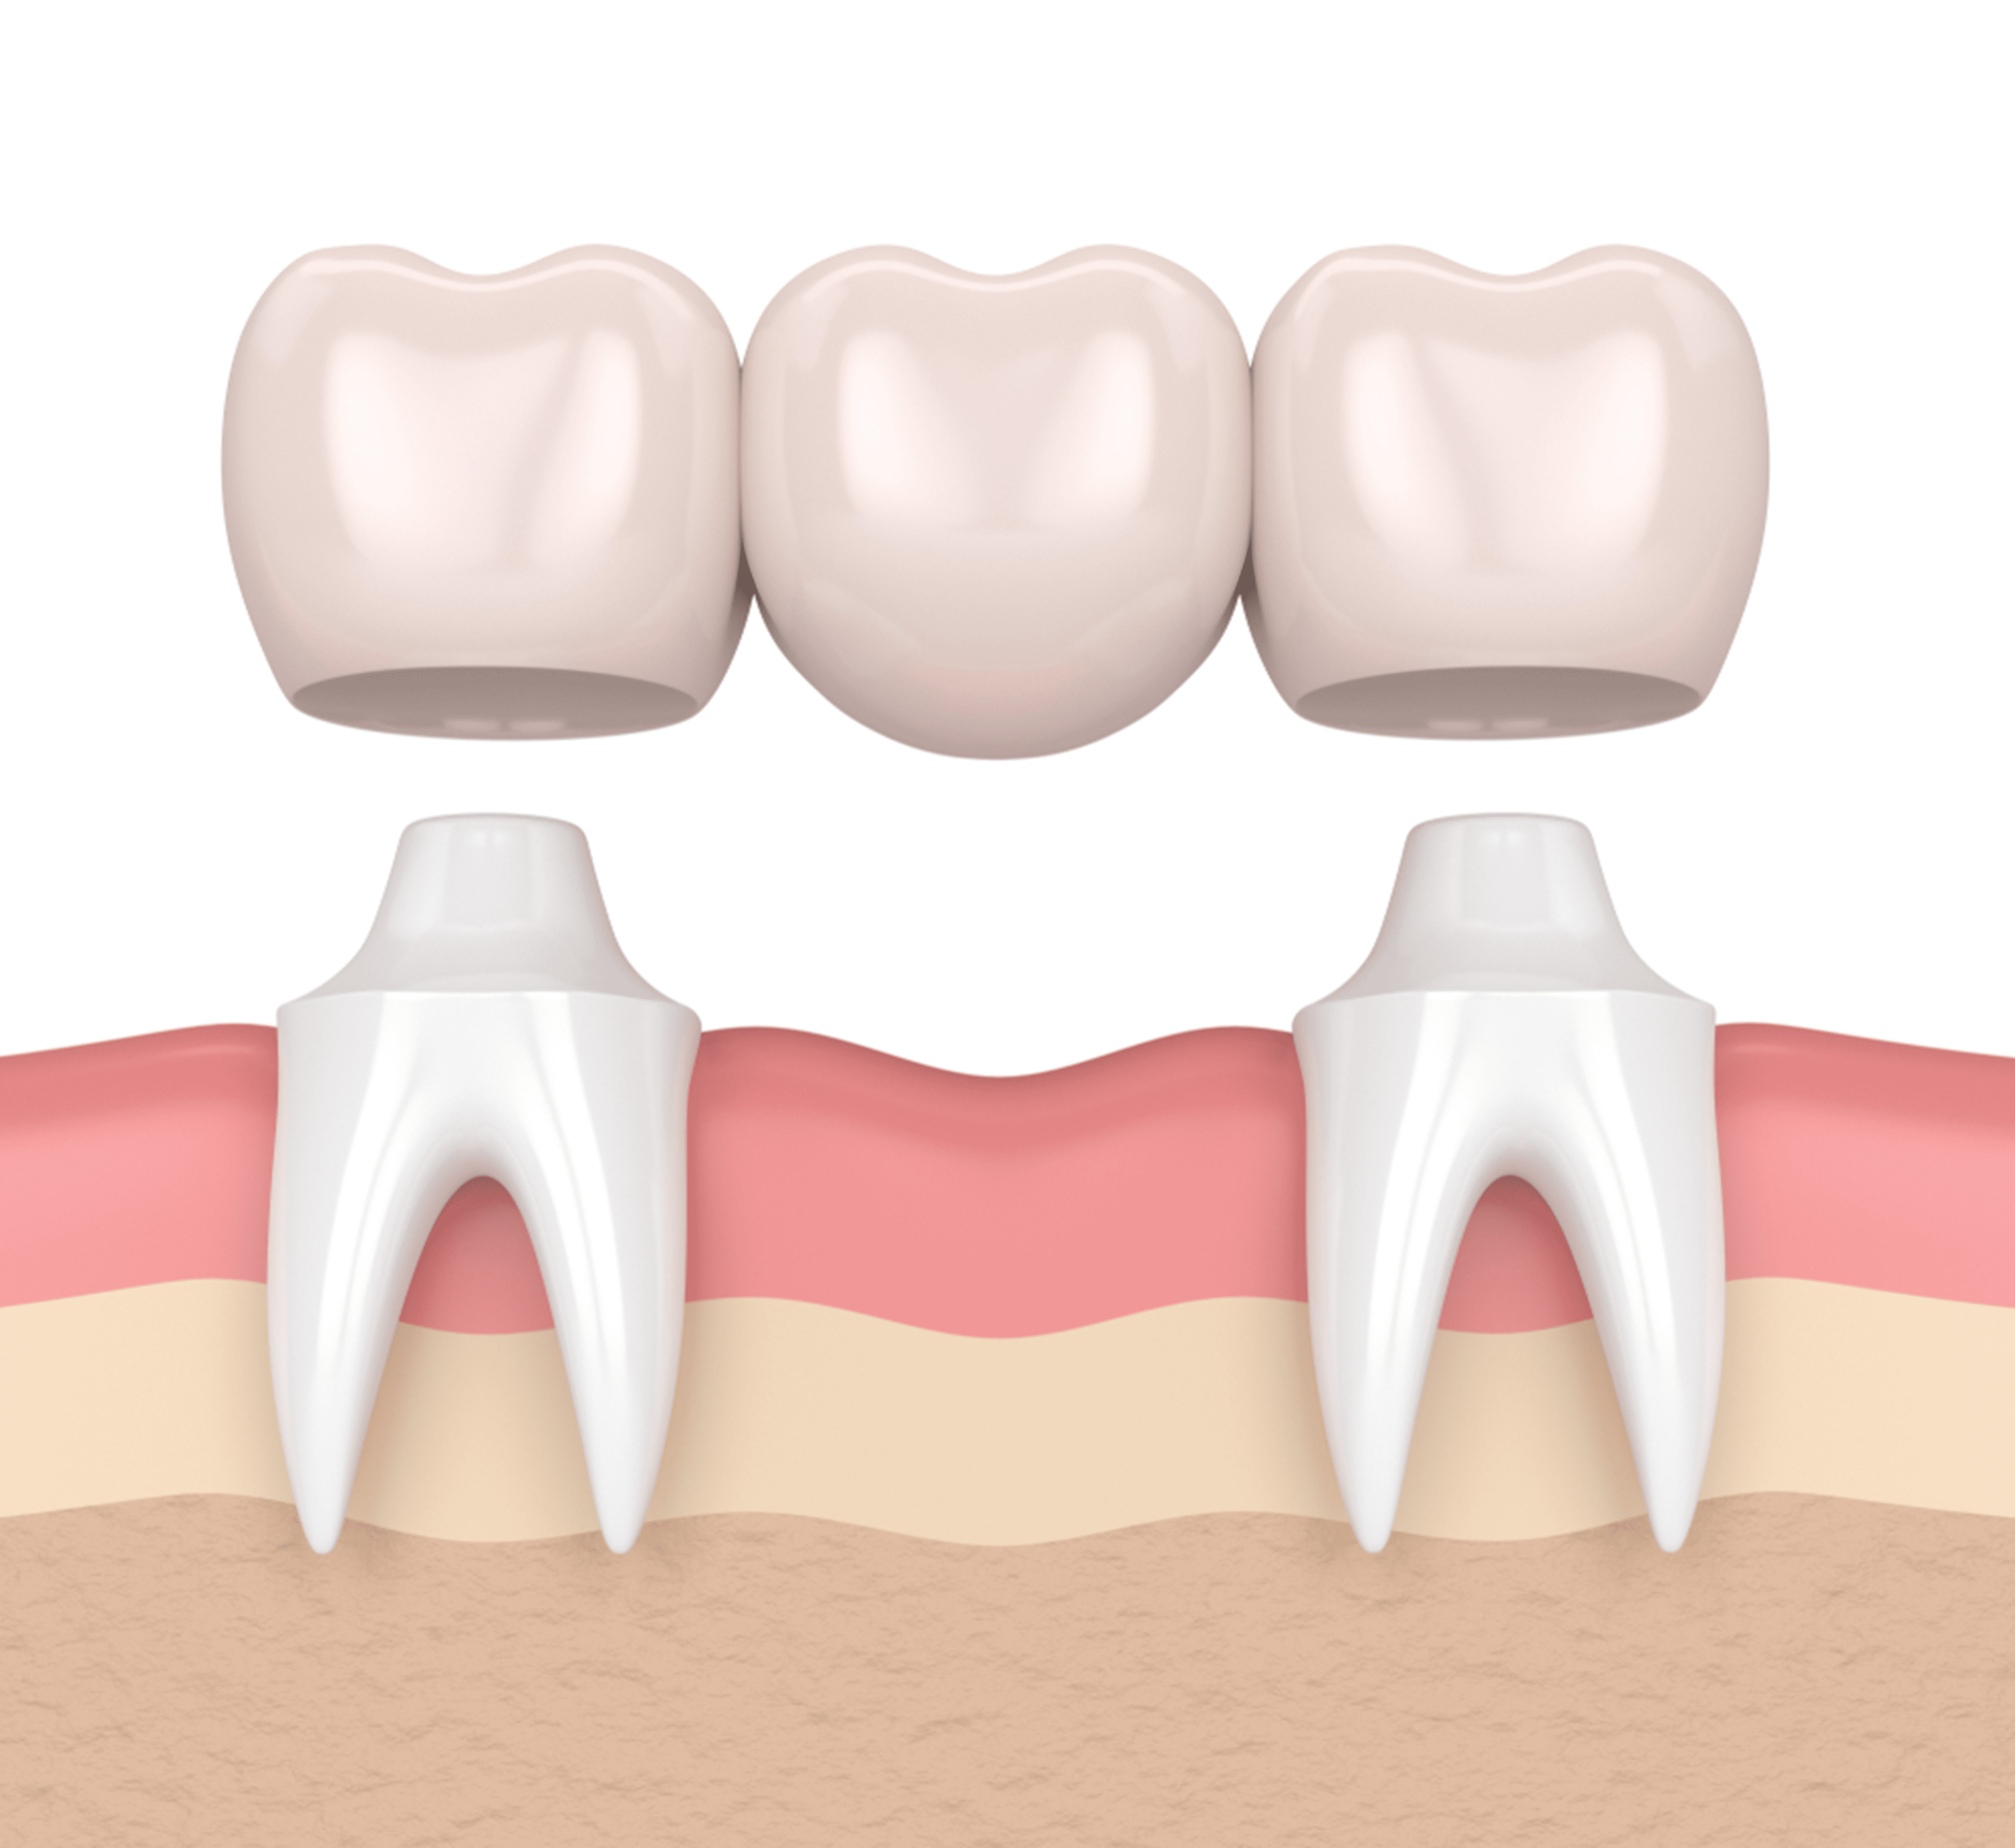 are dental bridges safe and long lasting